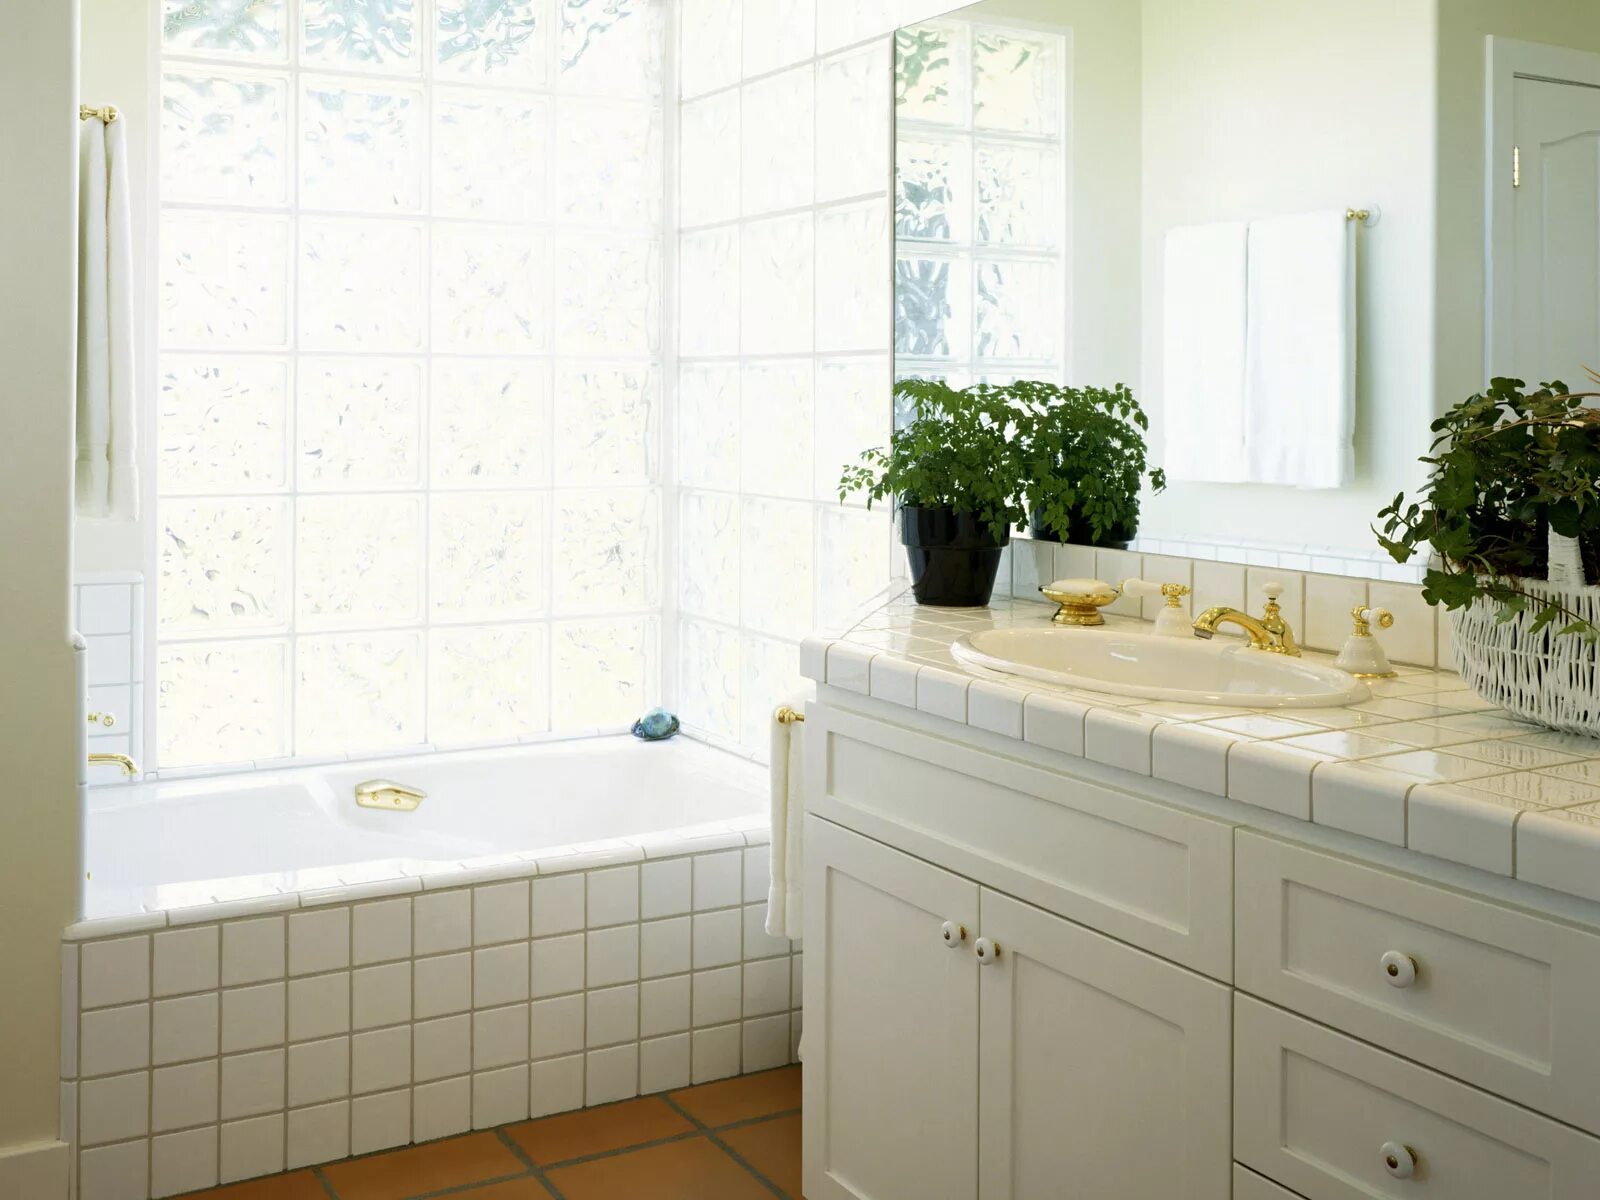 Красивая ванная комната. Ванная комната с растениями. Ванная с окном. Уютная ванная комната. Из ванны кухню можно